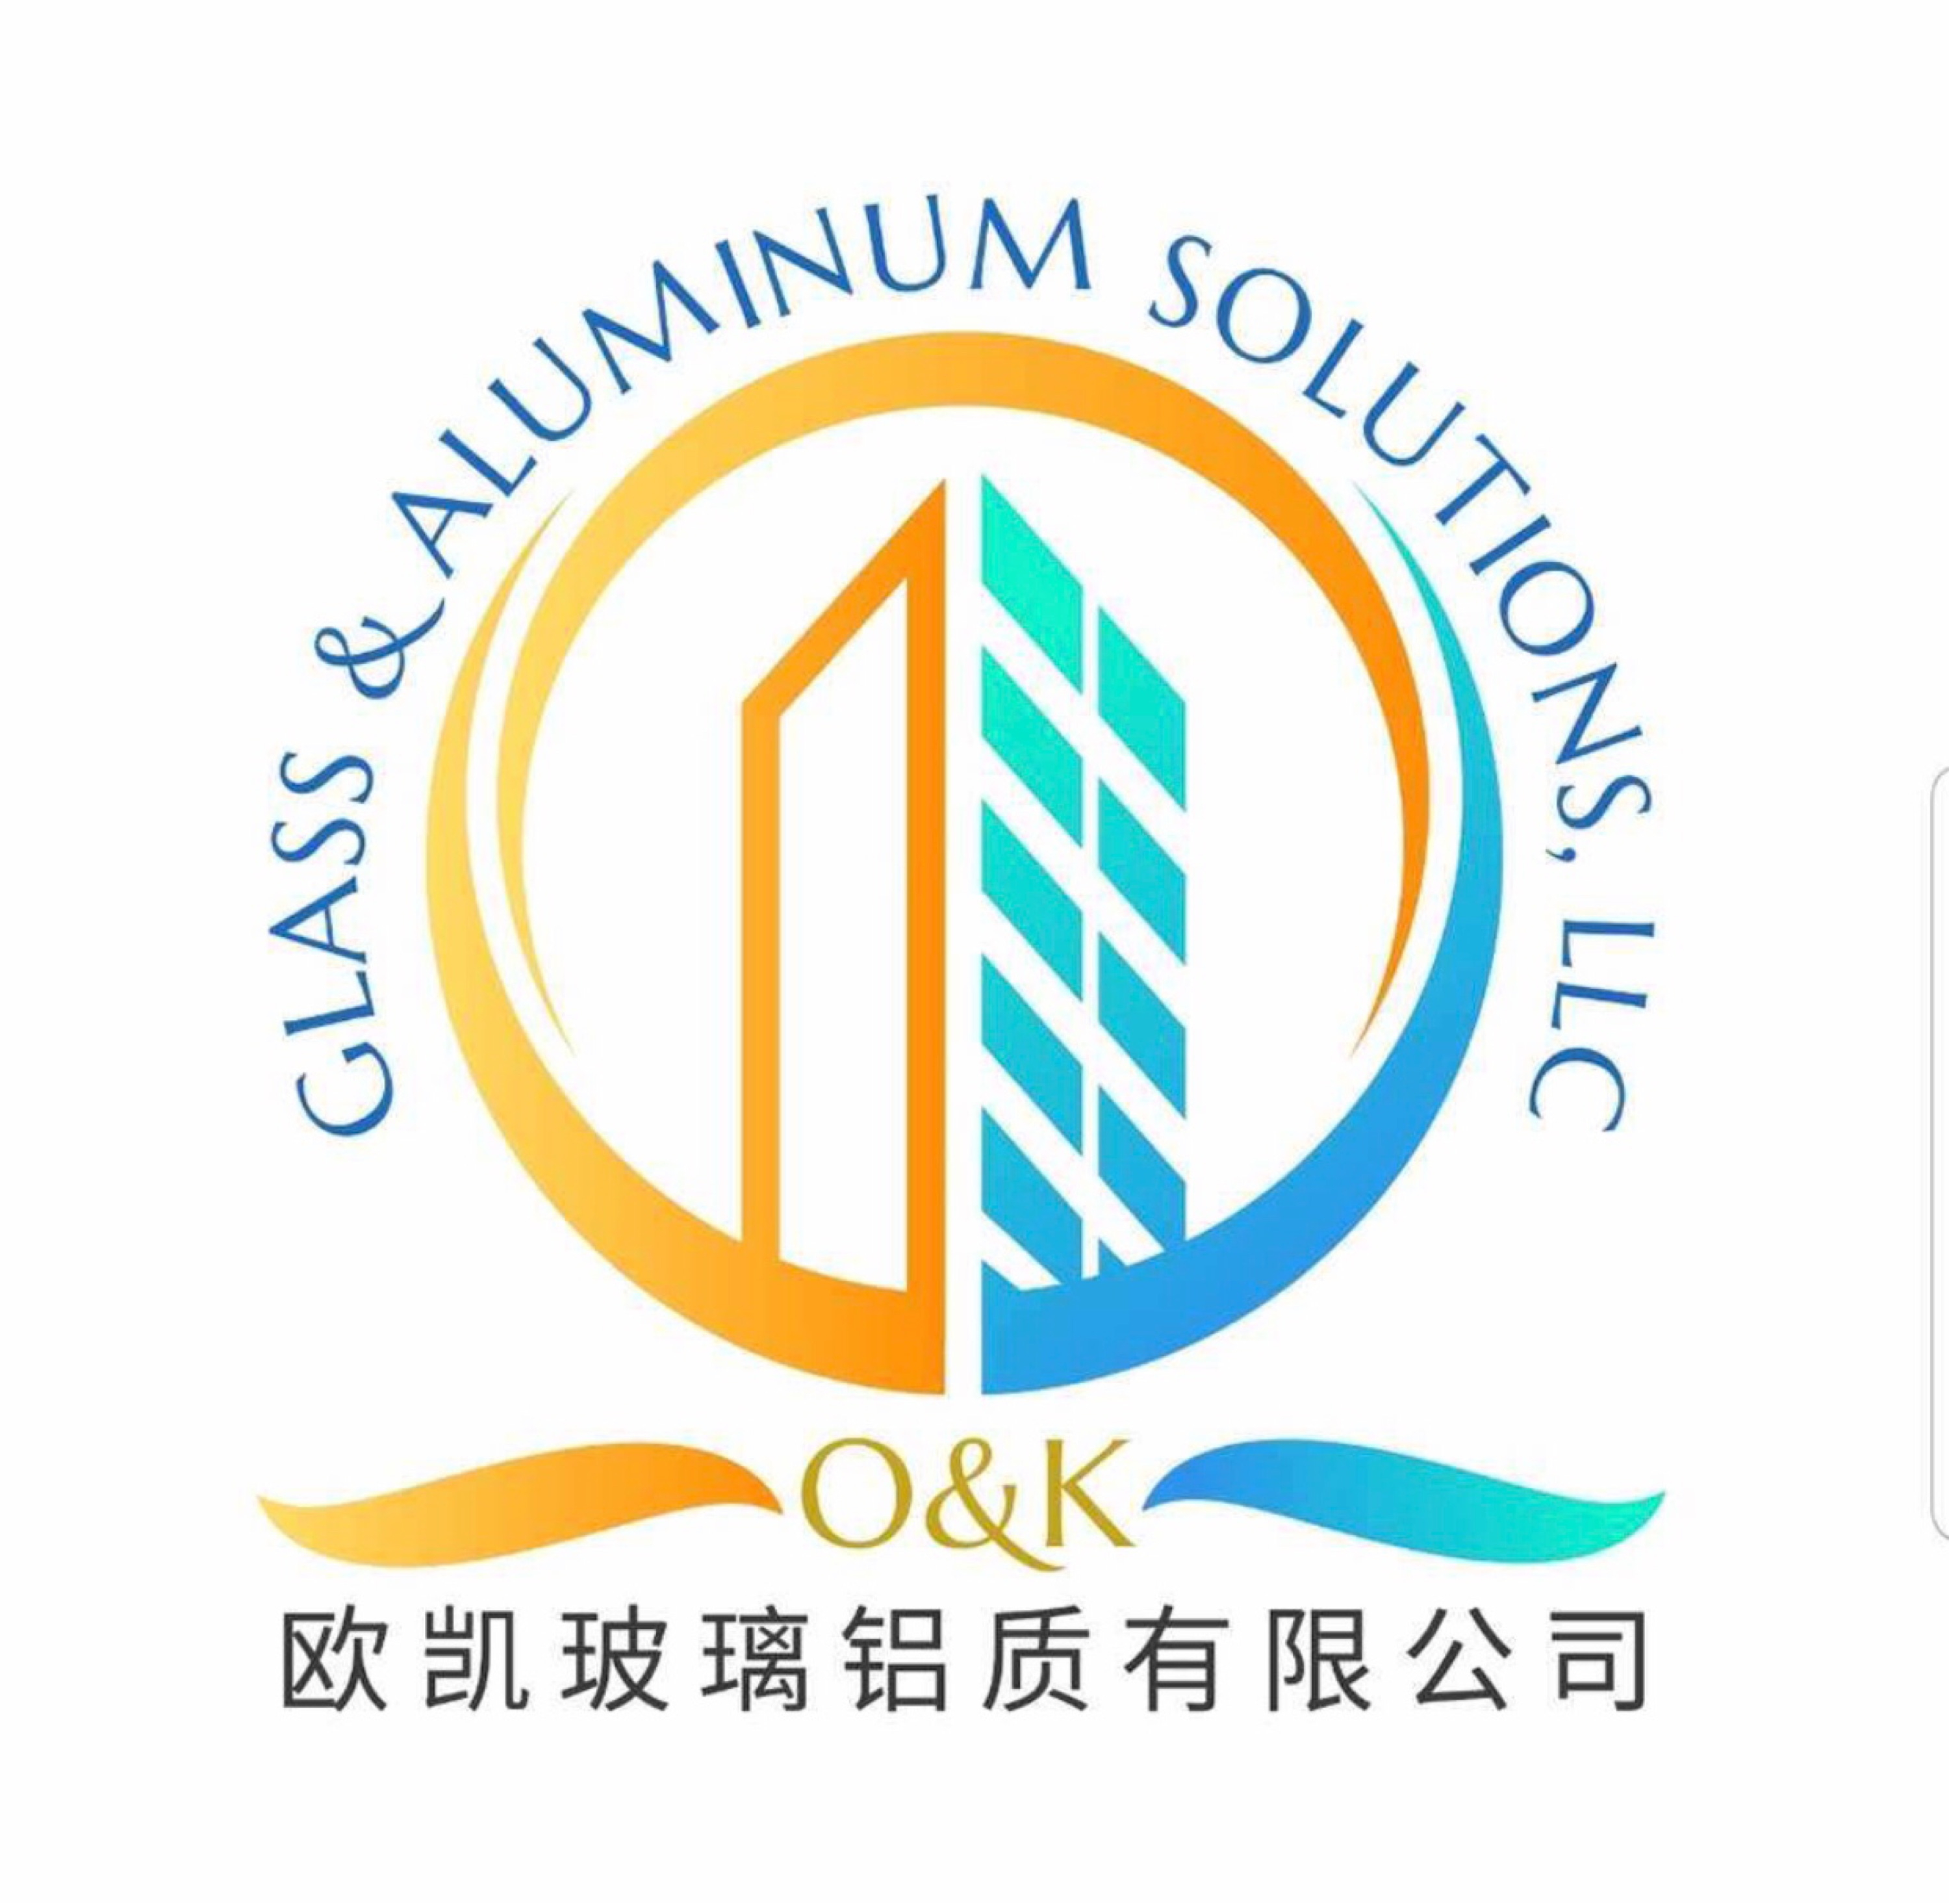 O&K Glass and Aluminum Solutions Logo